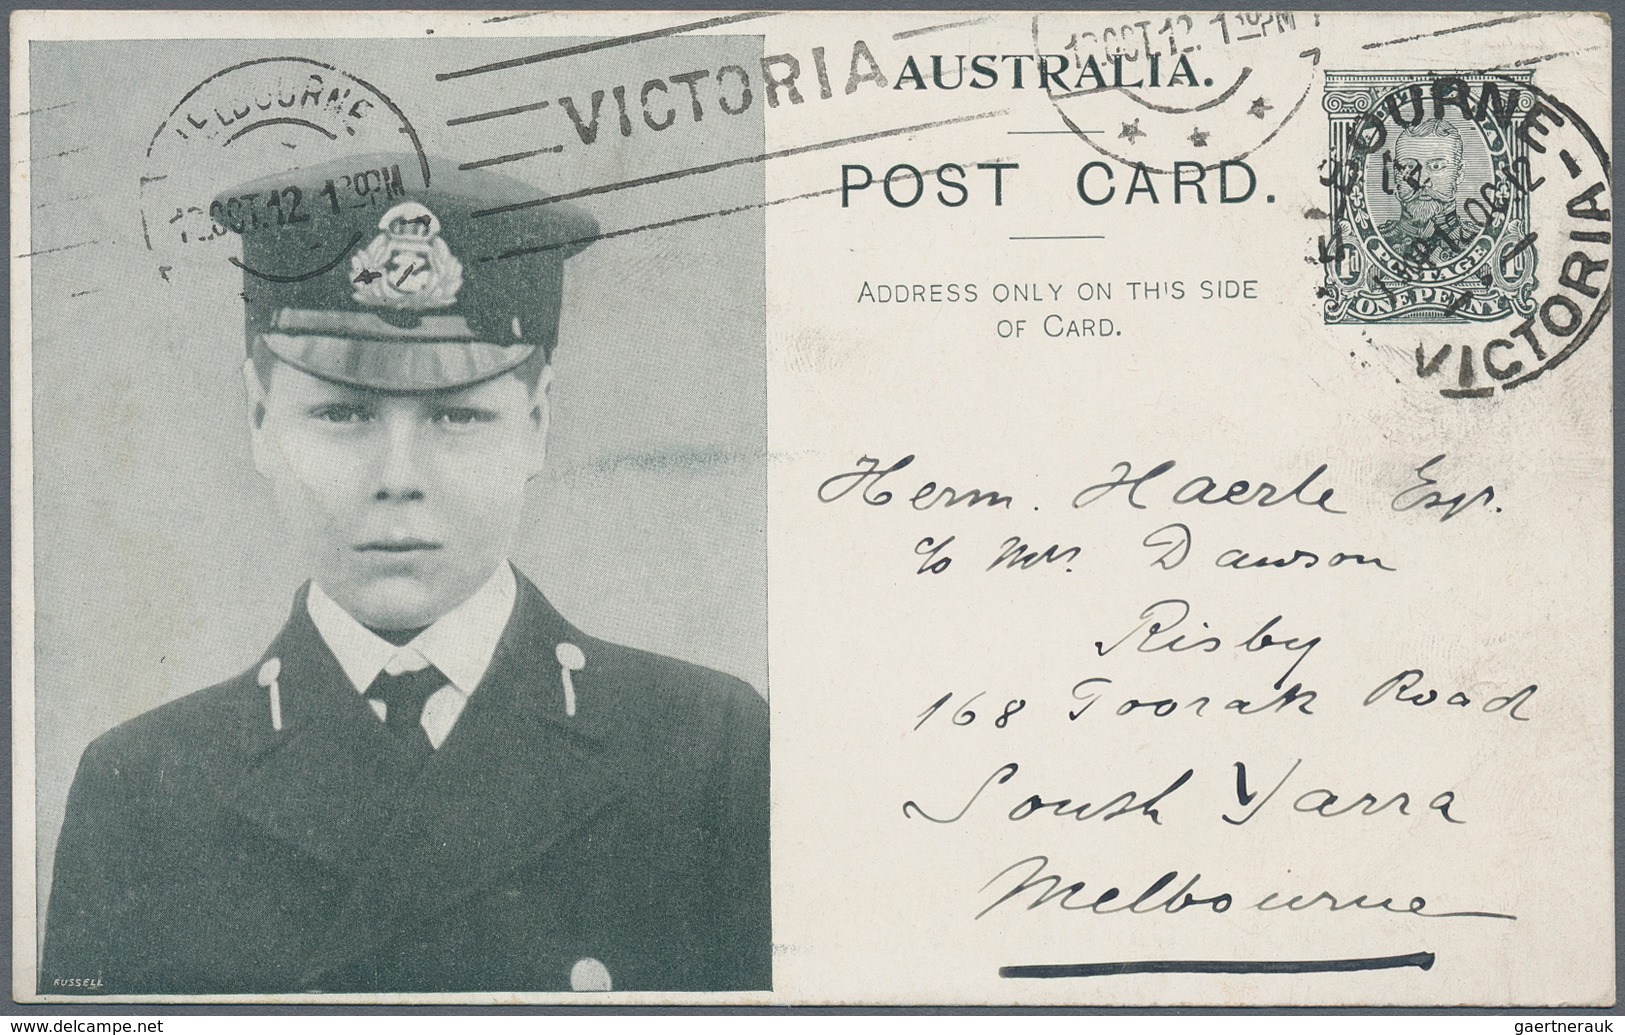 Australien - Ganzsachen: 1911, CORONATION POSTCARDS: Small Group With Nine Coronation Postcards (5 X - Ganzsachen